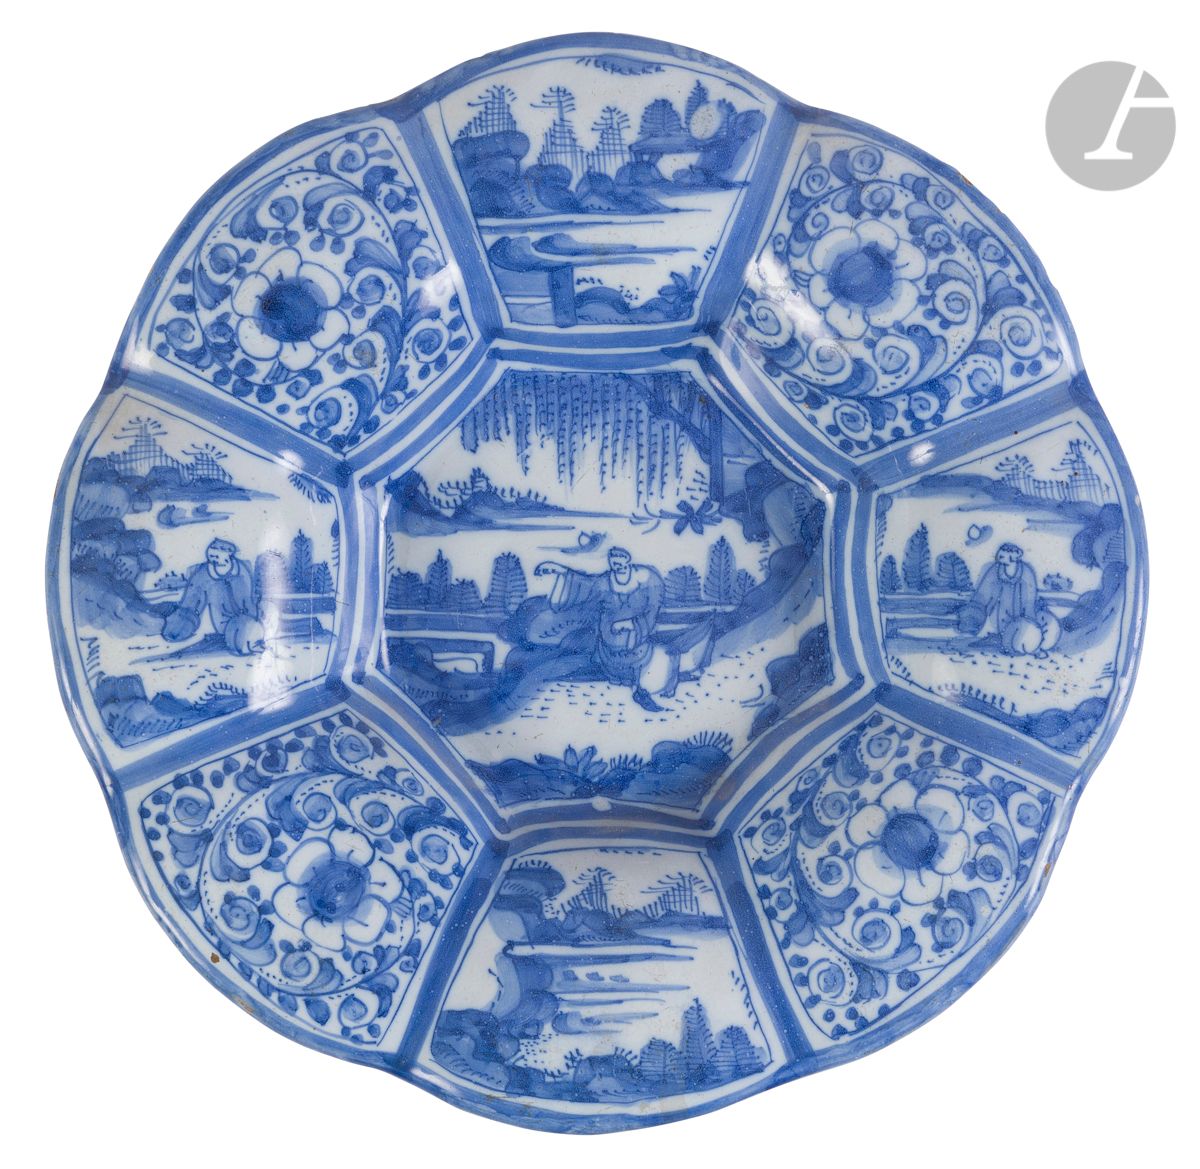 Null Delft
Plato redondo de loza con decoración monocroma azul de chinos en pais&hellip;